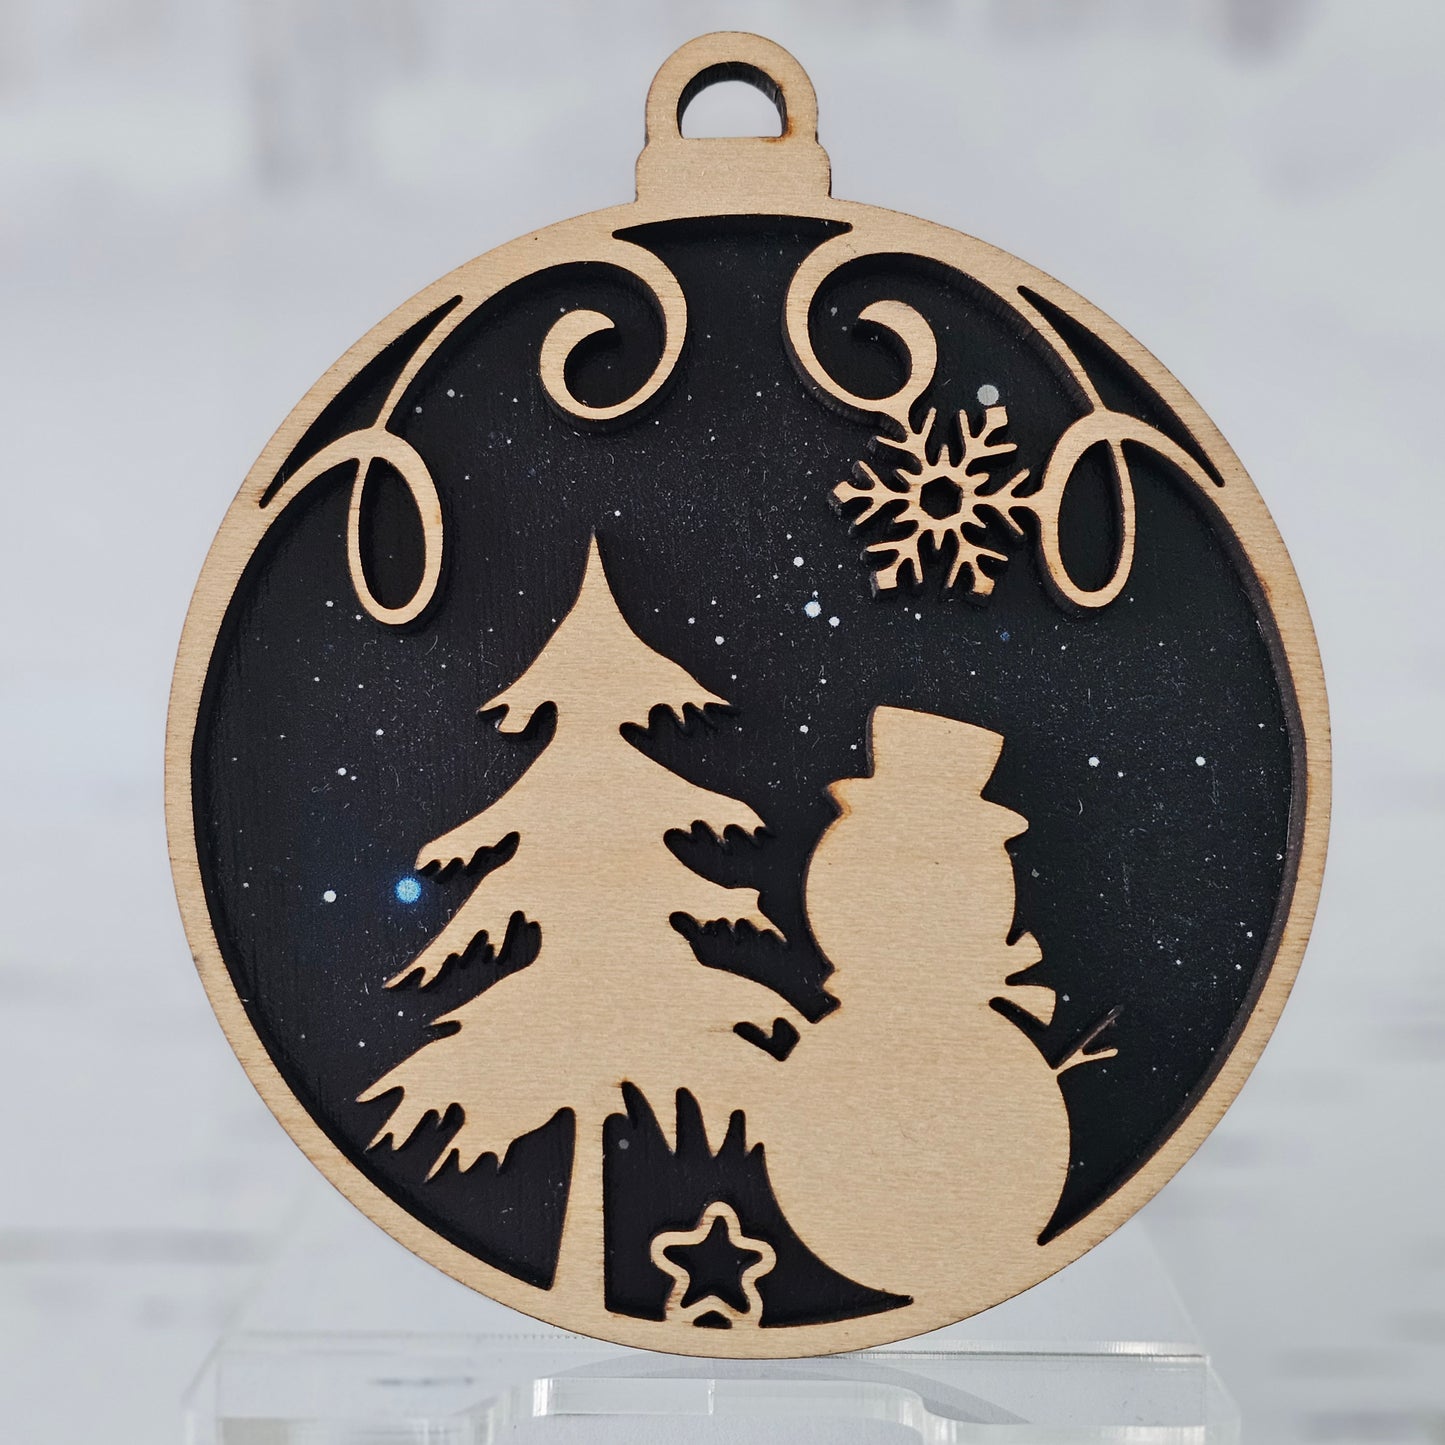 Snowman Ornament - Opaque Midnight Sky